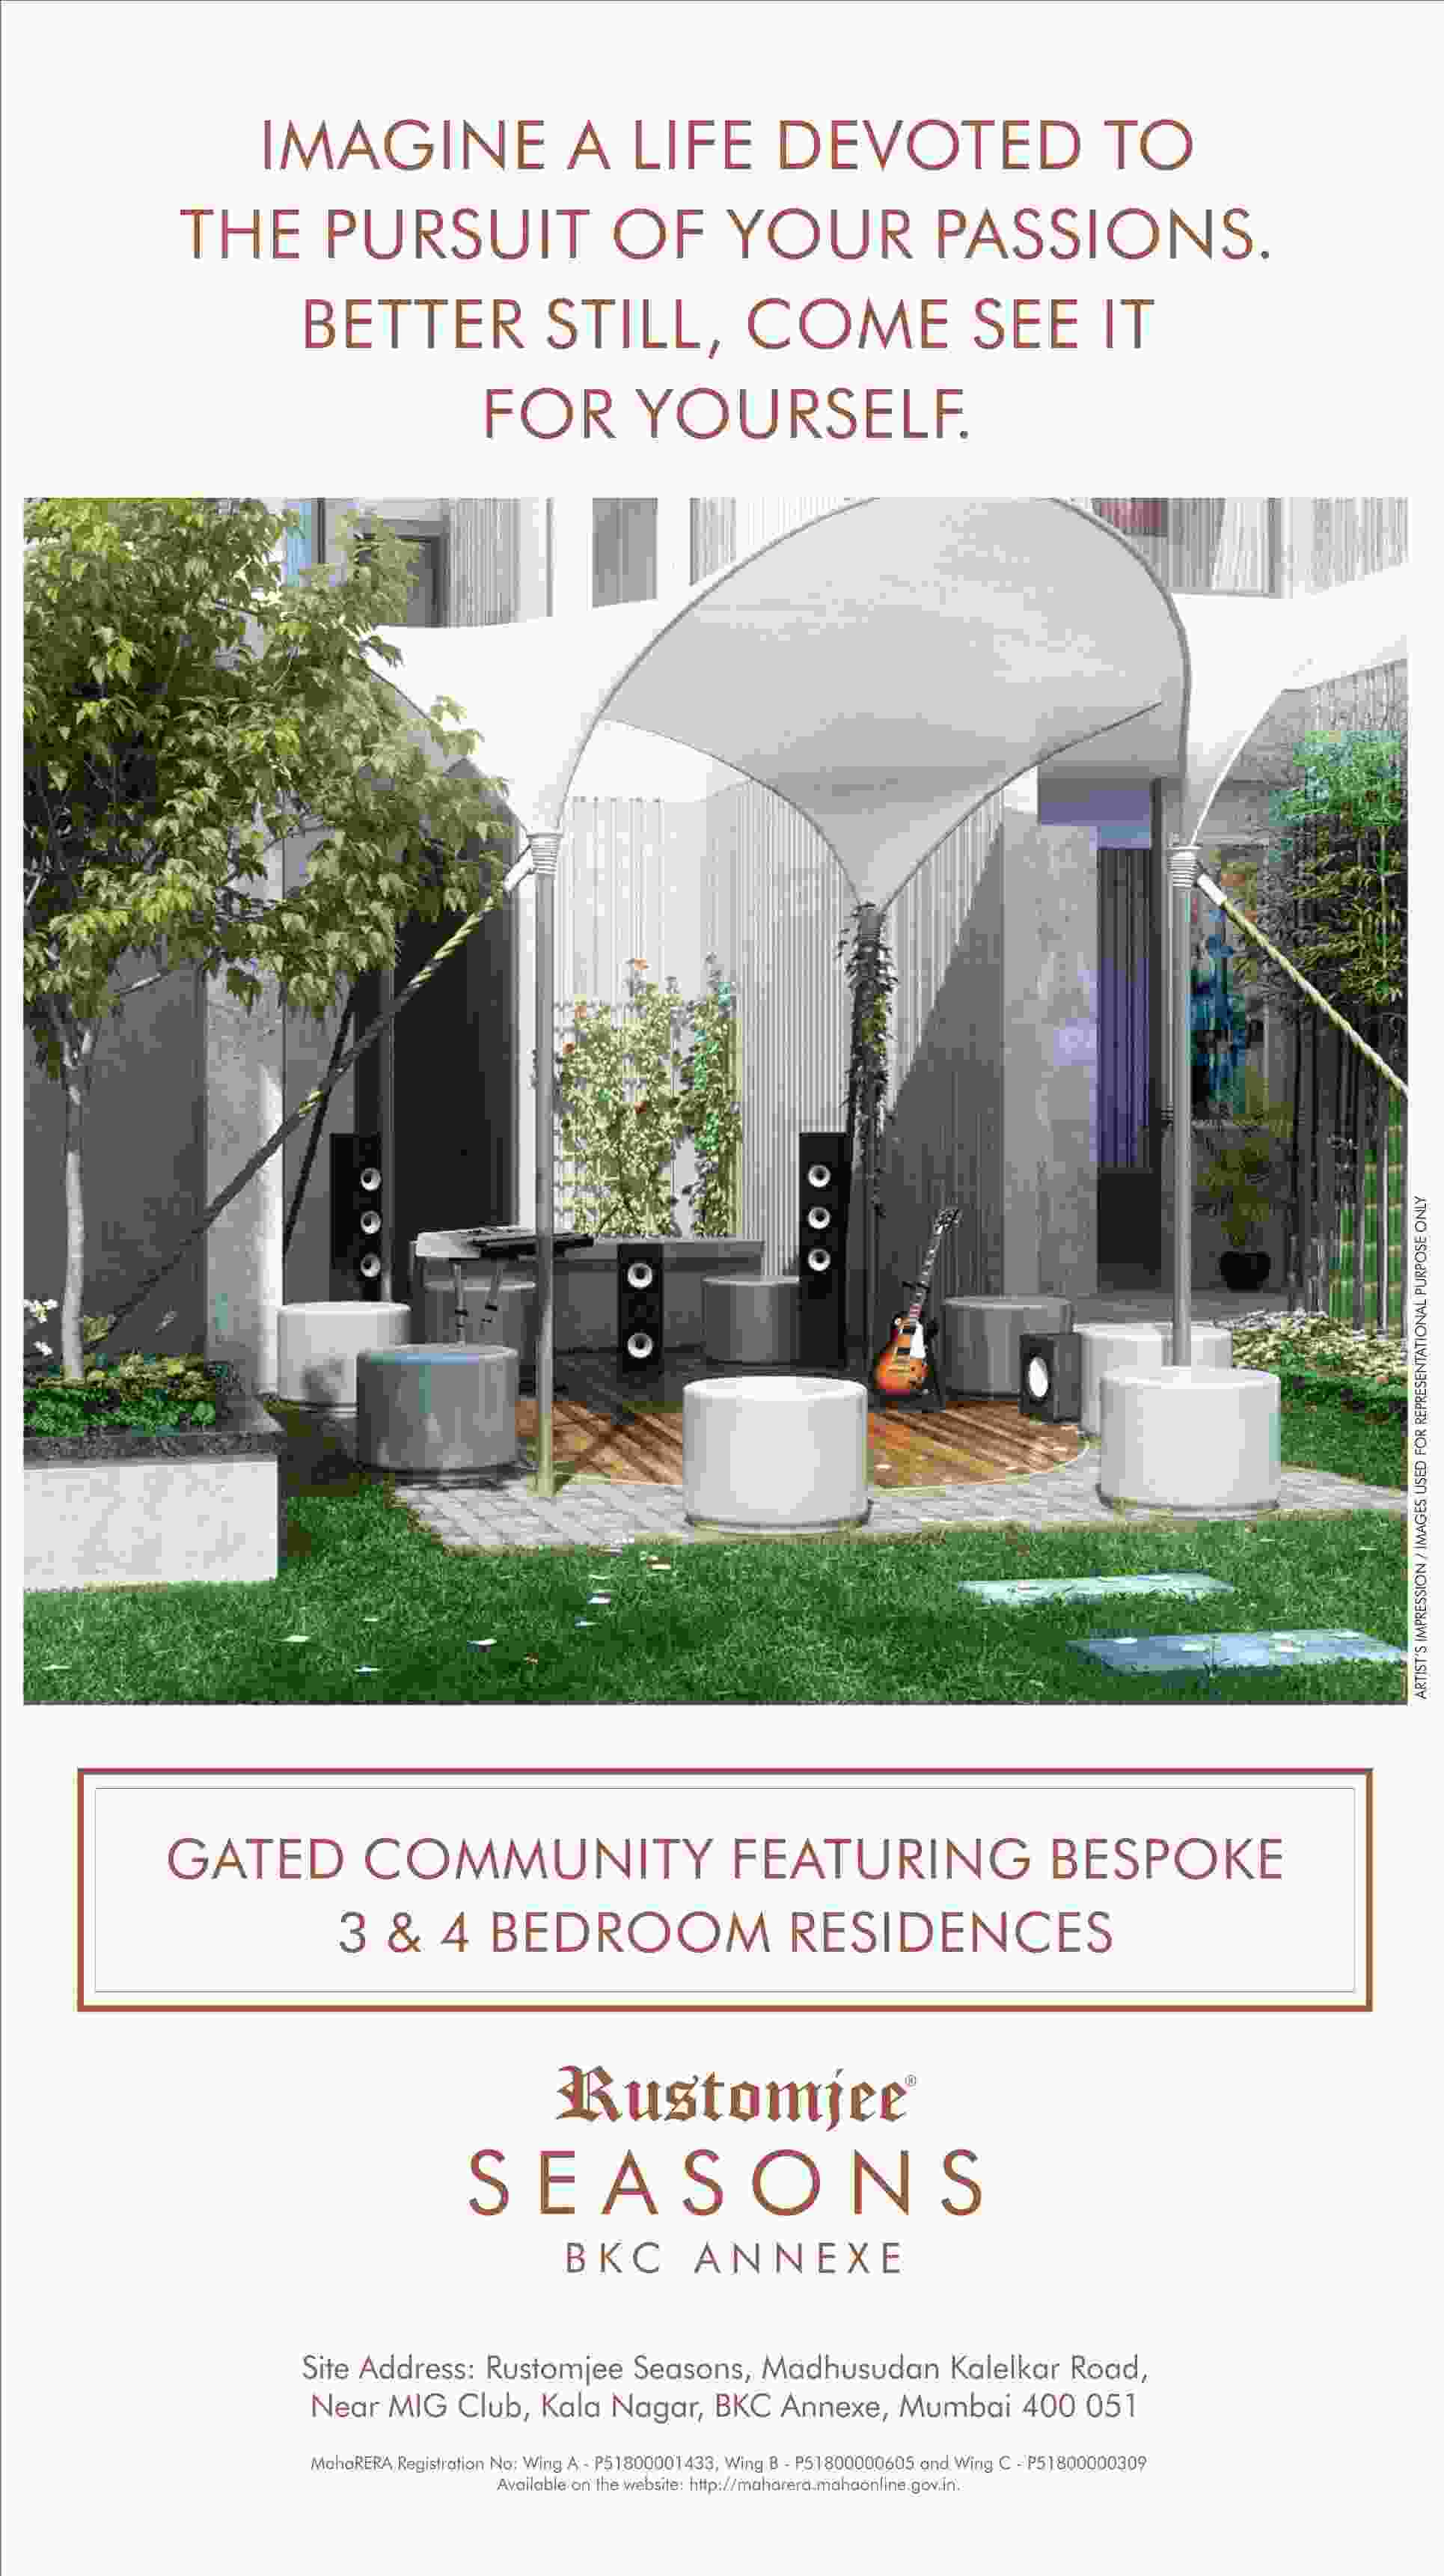 Gated community featuring bespoke 3 & 4 residences at Rustomjee Seasons in Mumbai